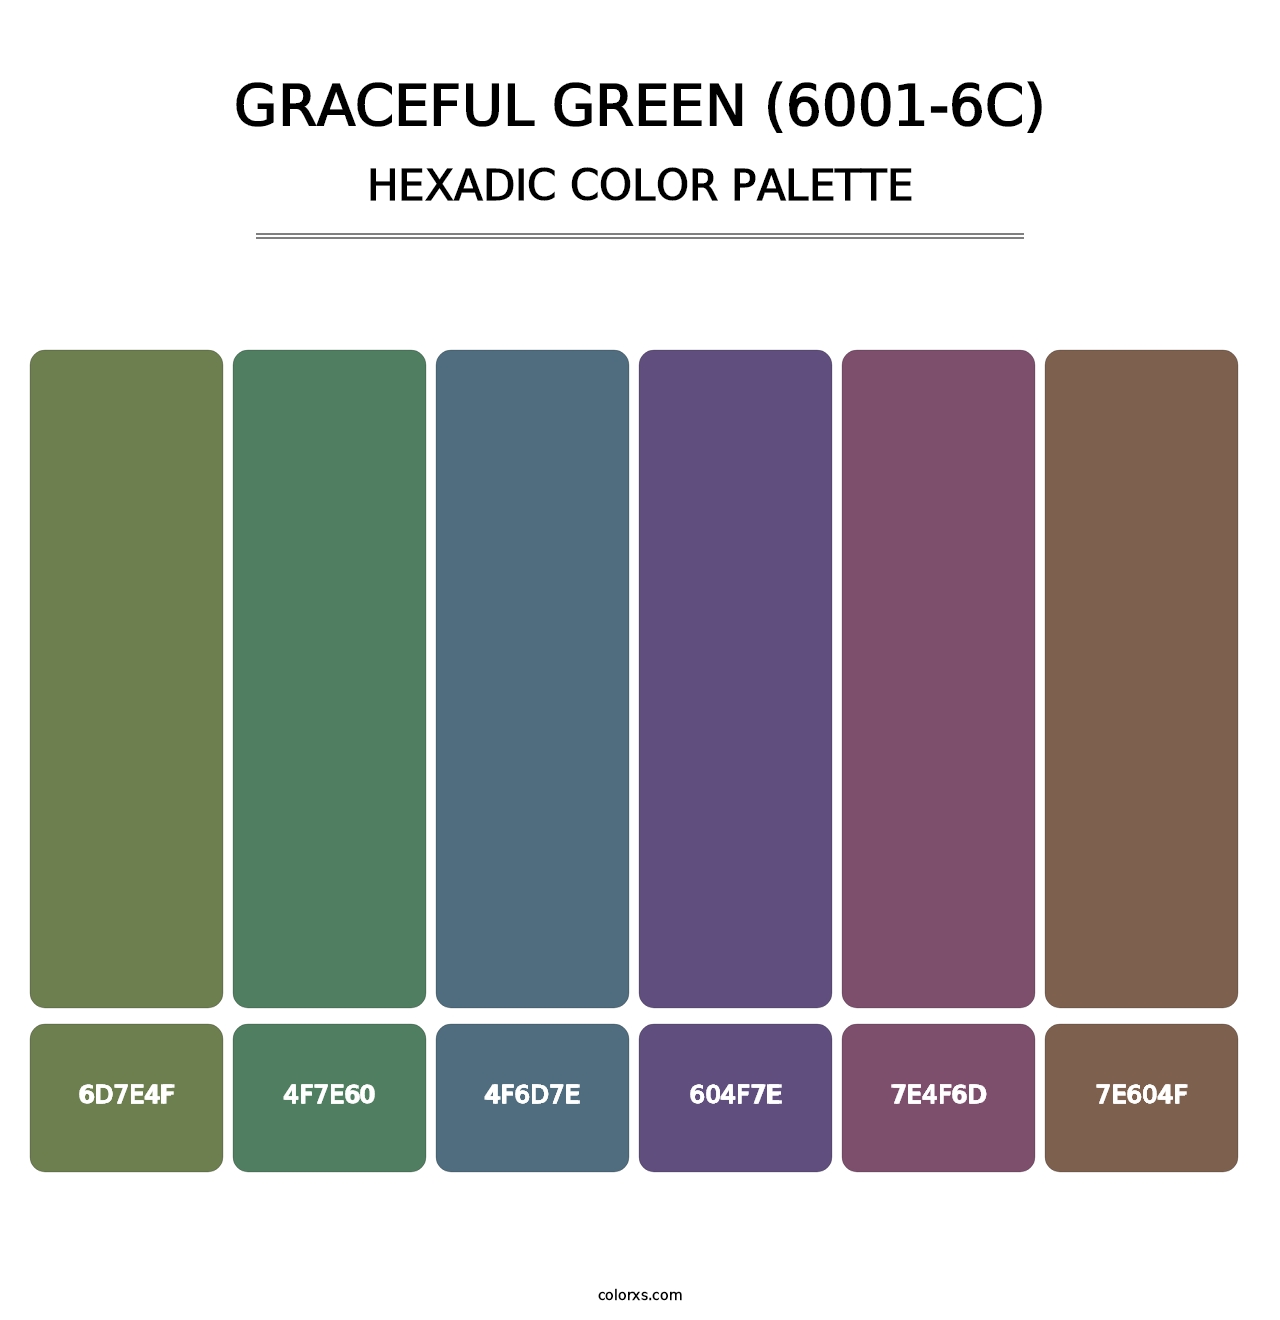 Graceful Green (6001-6C) - Hexadic Color Palette